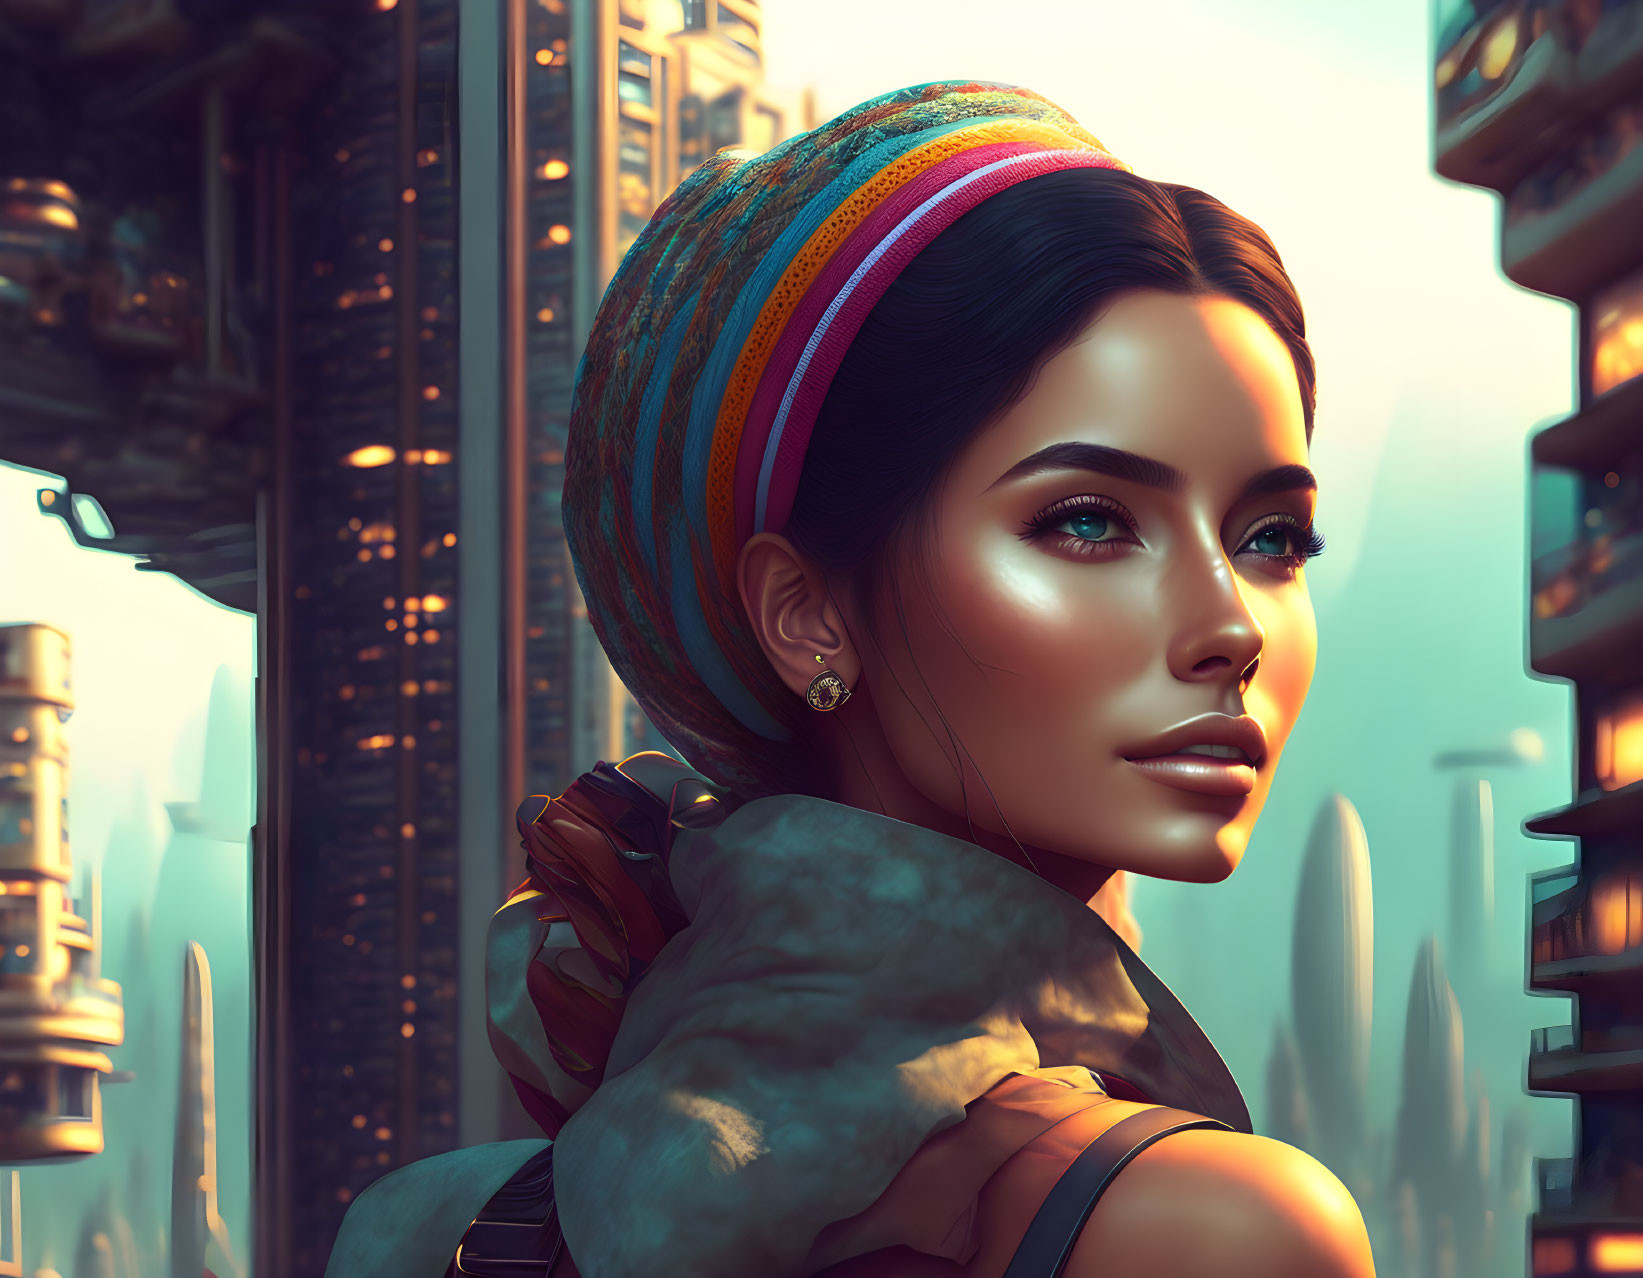 Colorful headband woman illustration in futuristic cityscape at dusk